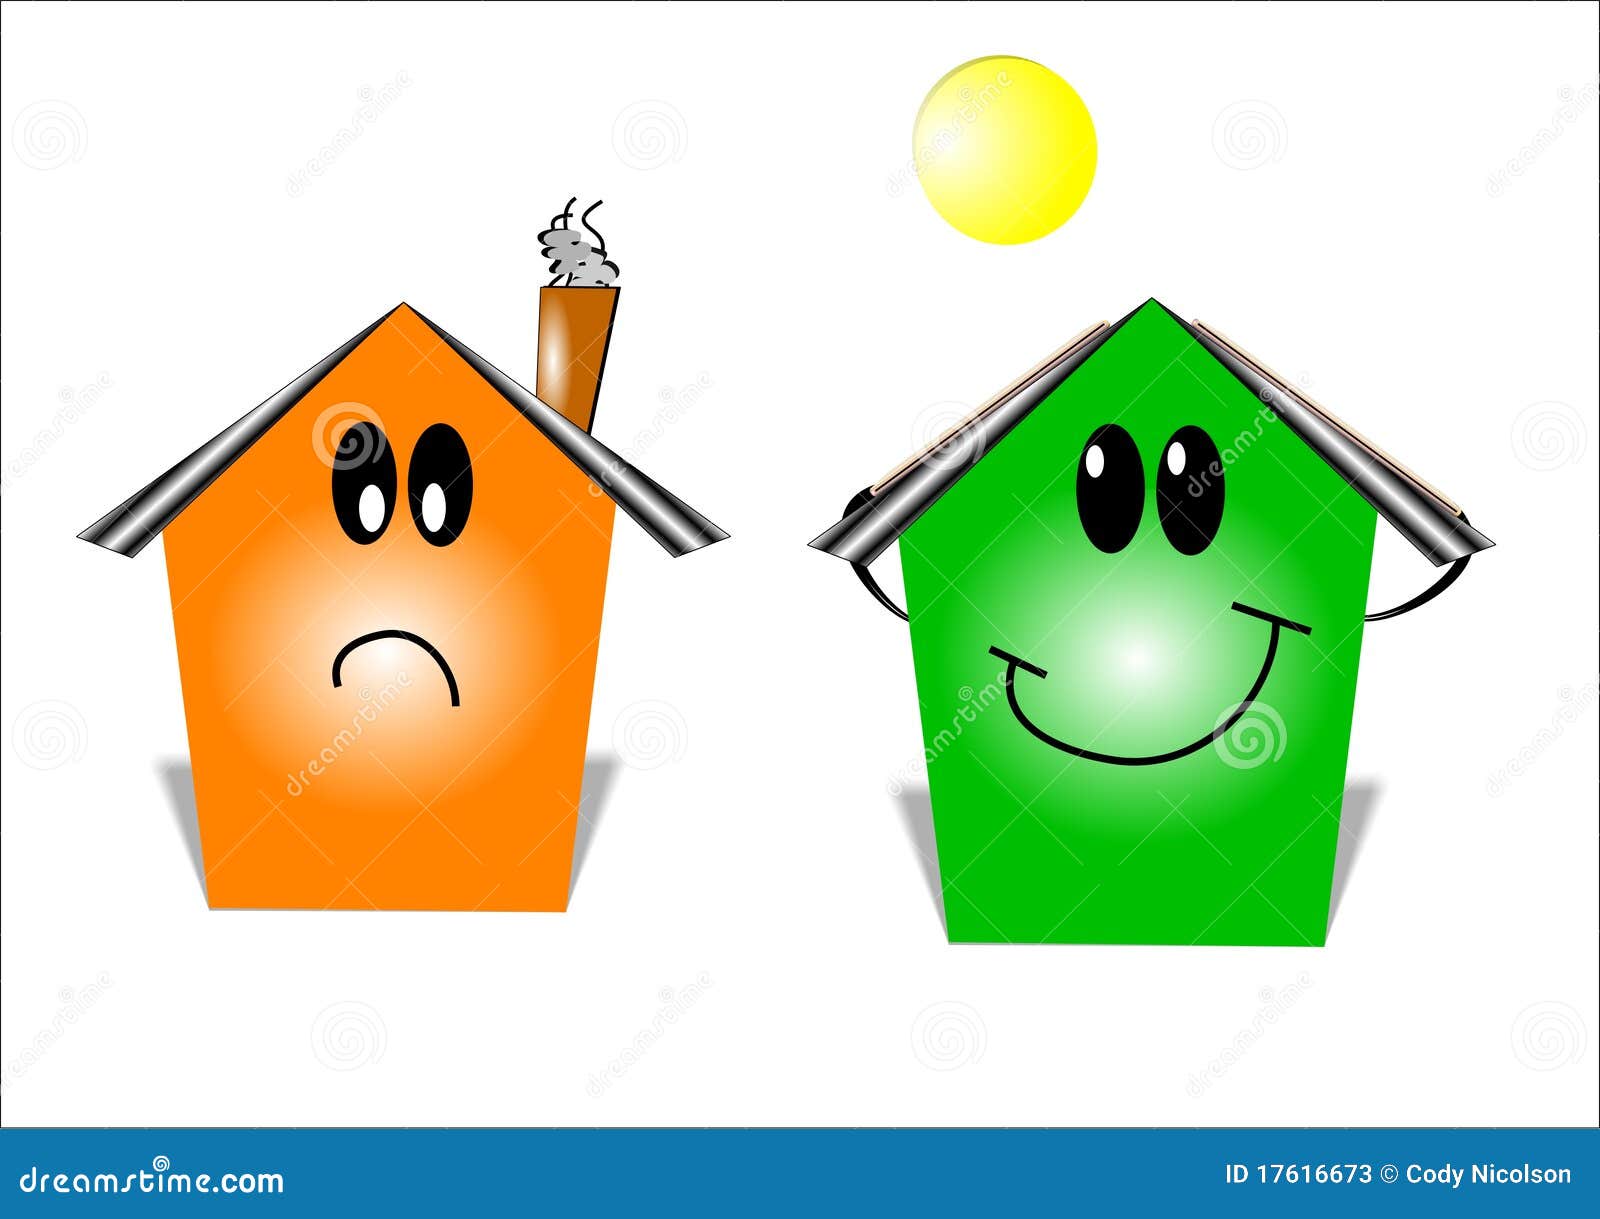 Energy saving home stock illustration. Illustration of cartoon - 17616673